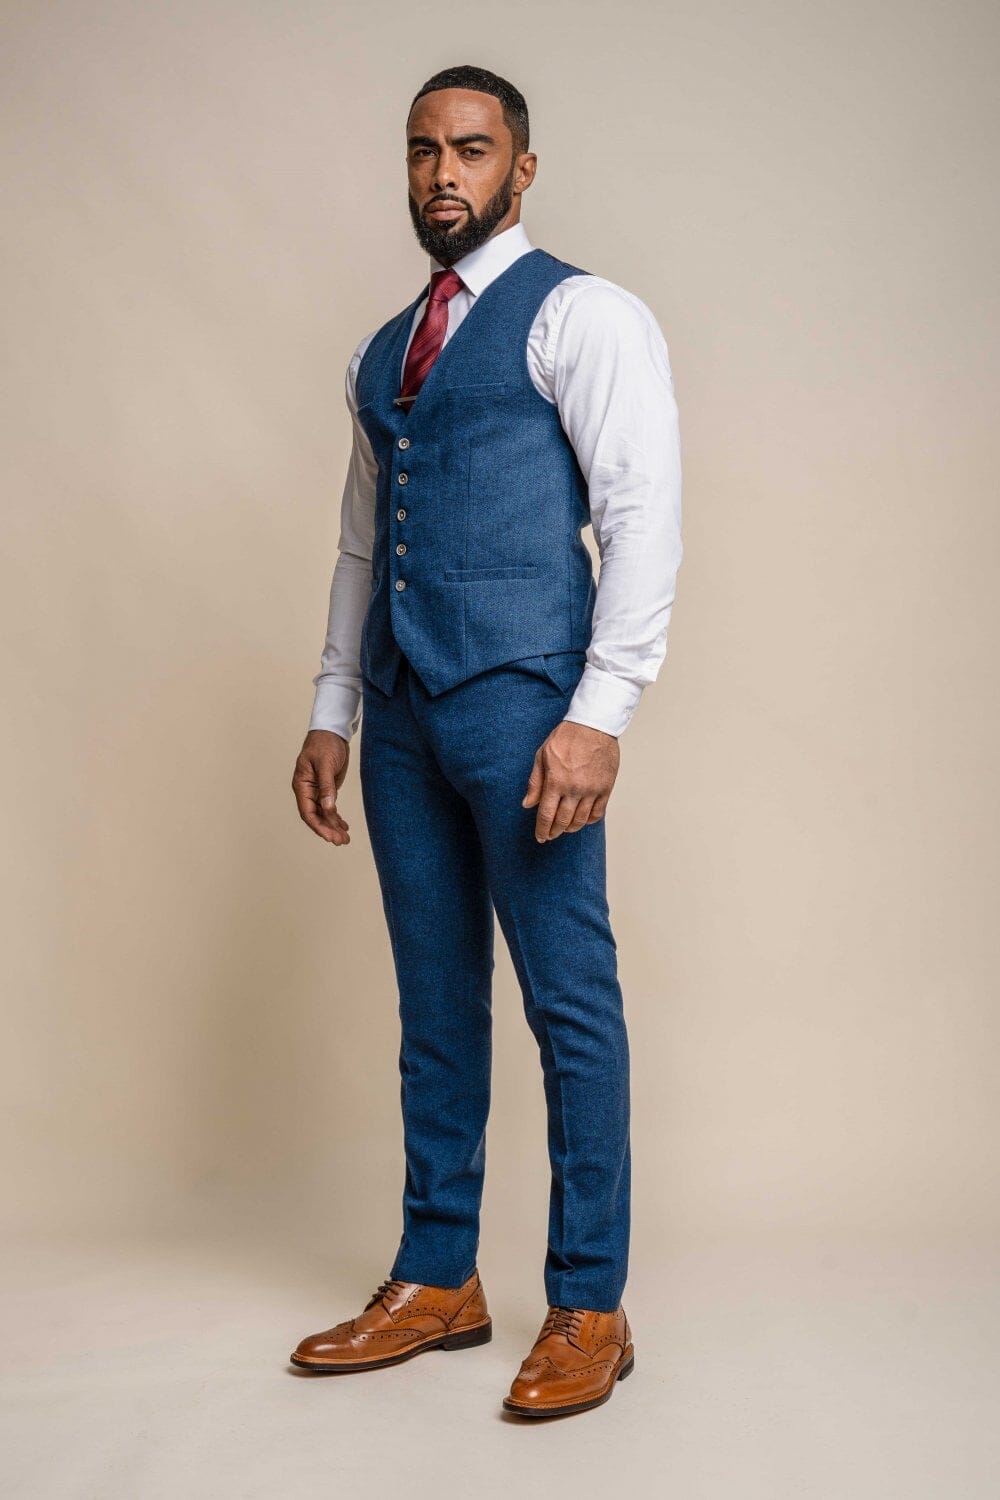 Orson Blue Tweed 3 Piece Wedding Suit - Suits - - THREADPEPPER